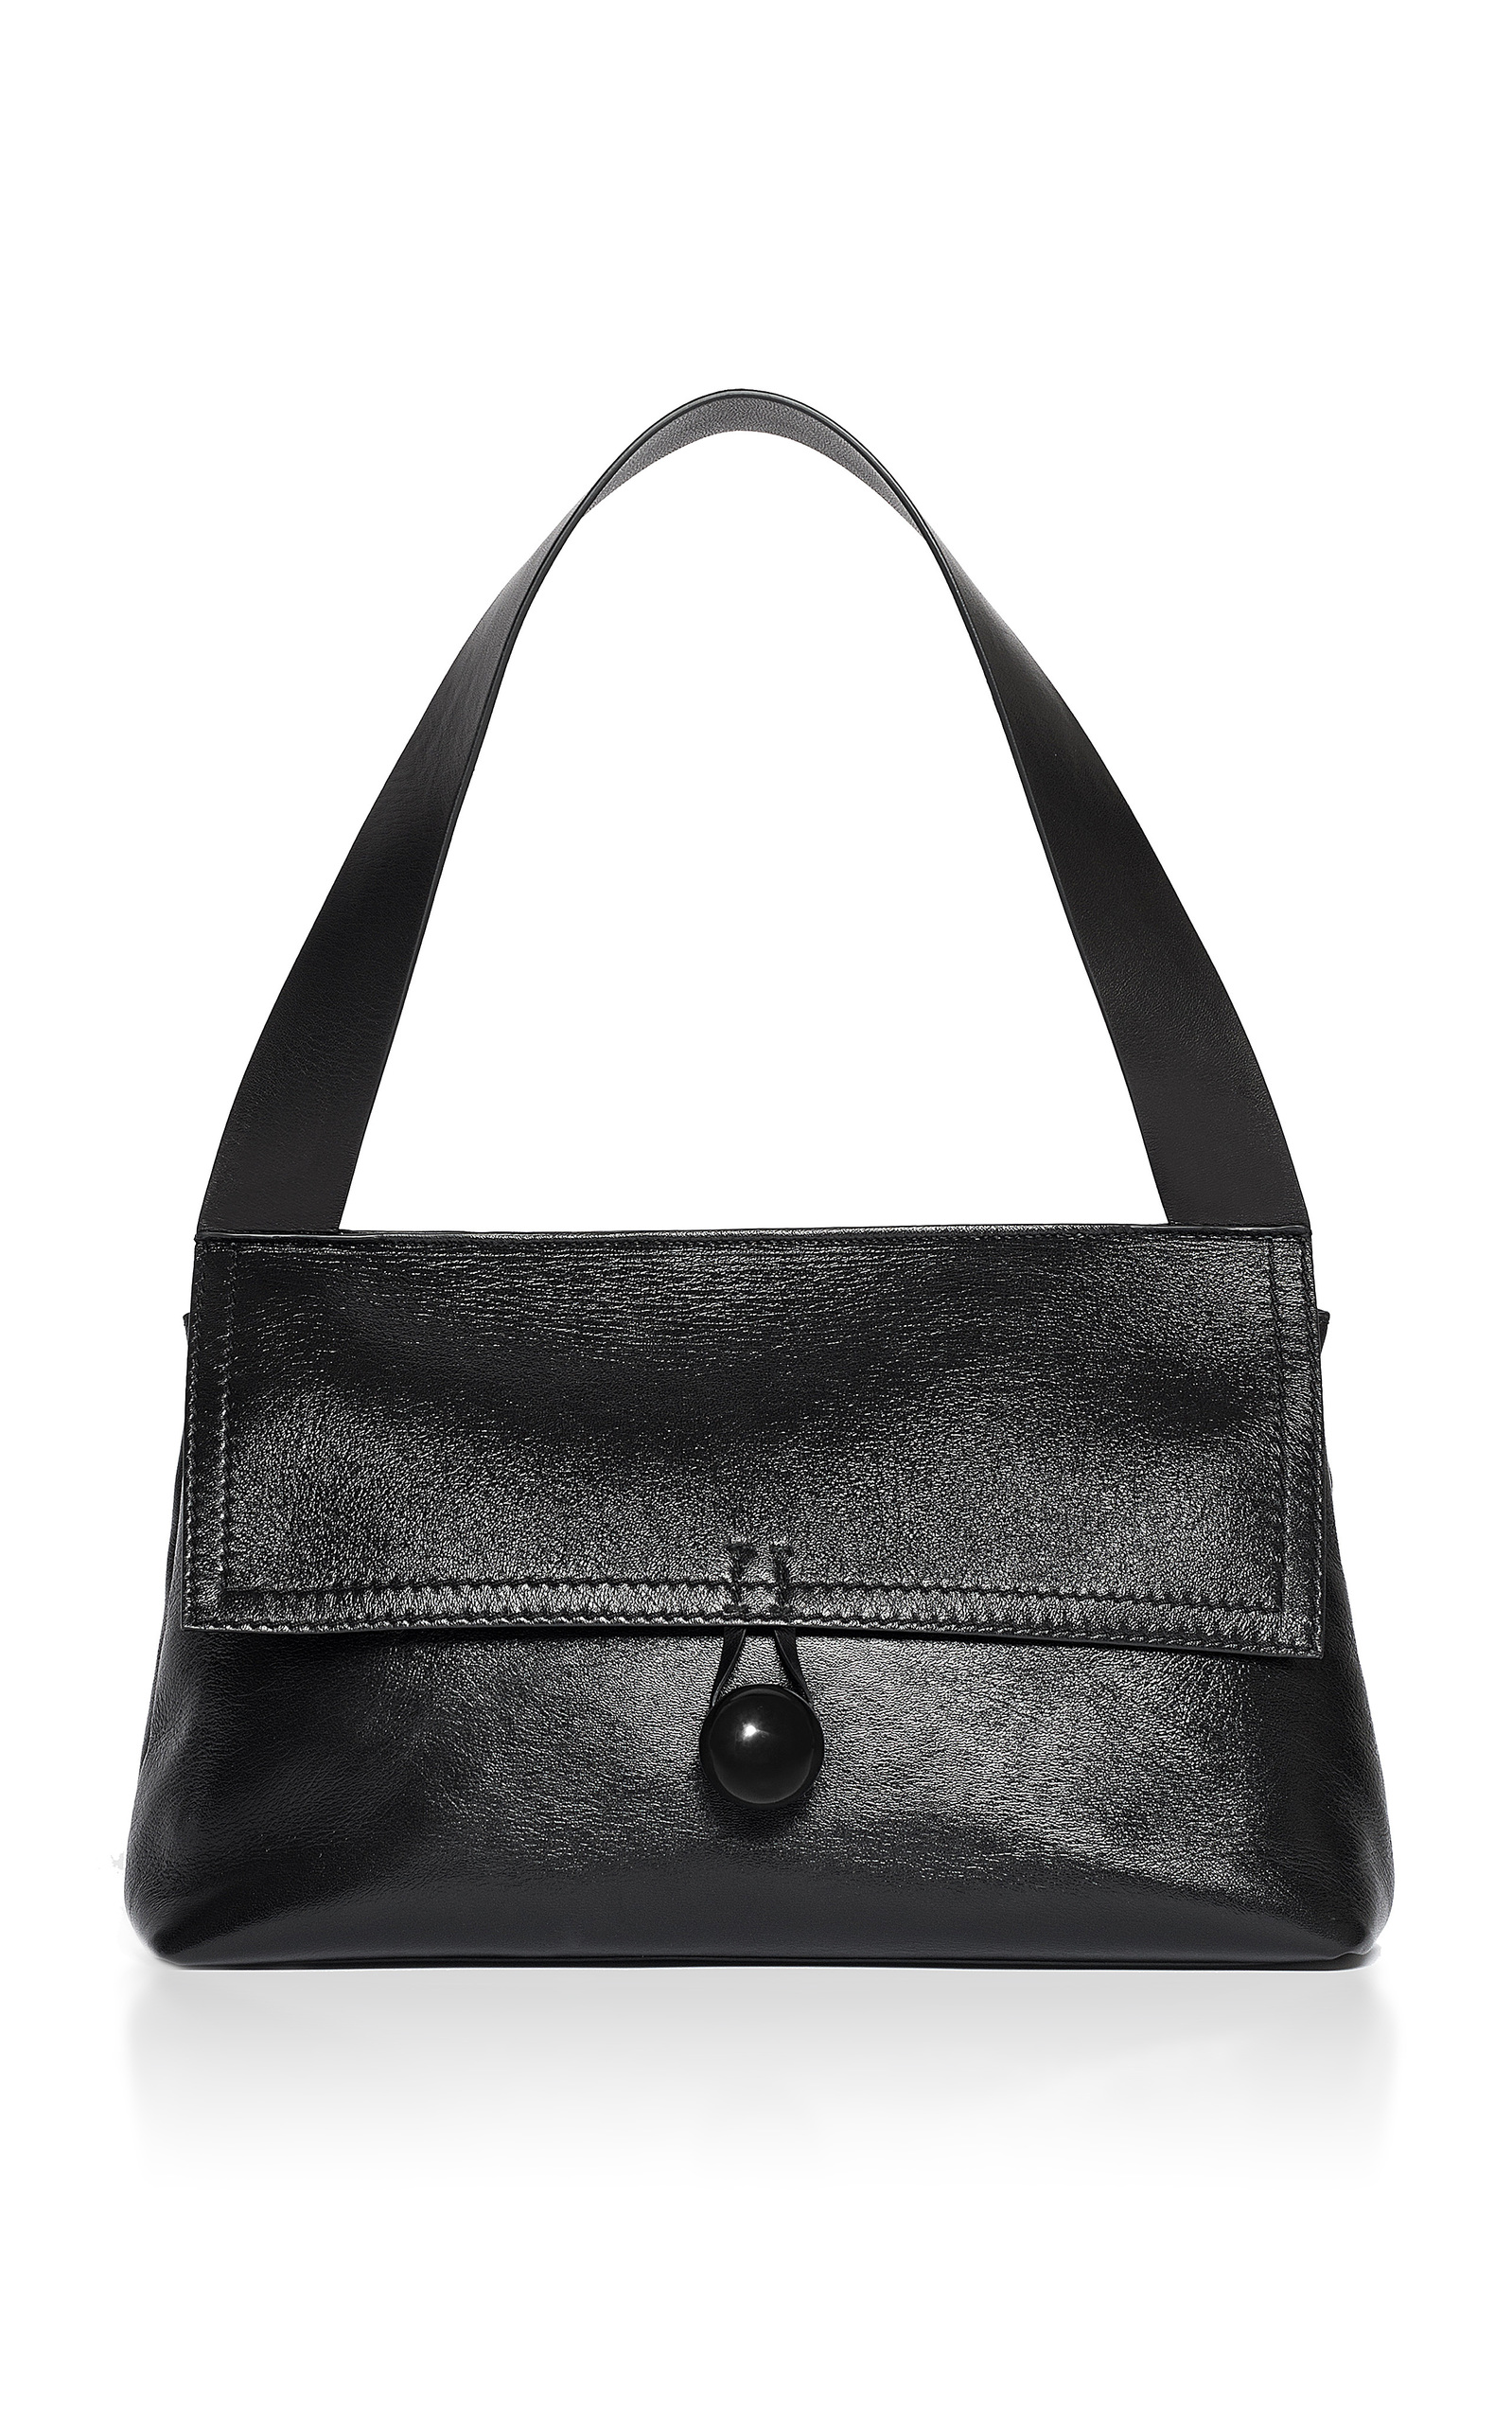 CORTO MOLTEDO Rose Shoulder Bag in Black | ModeSens